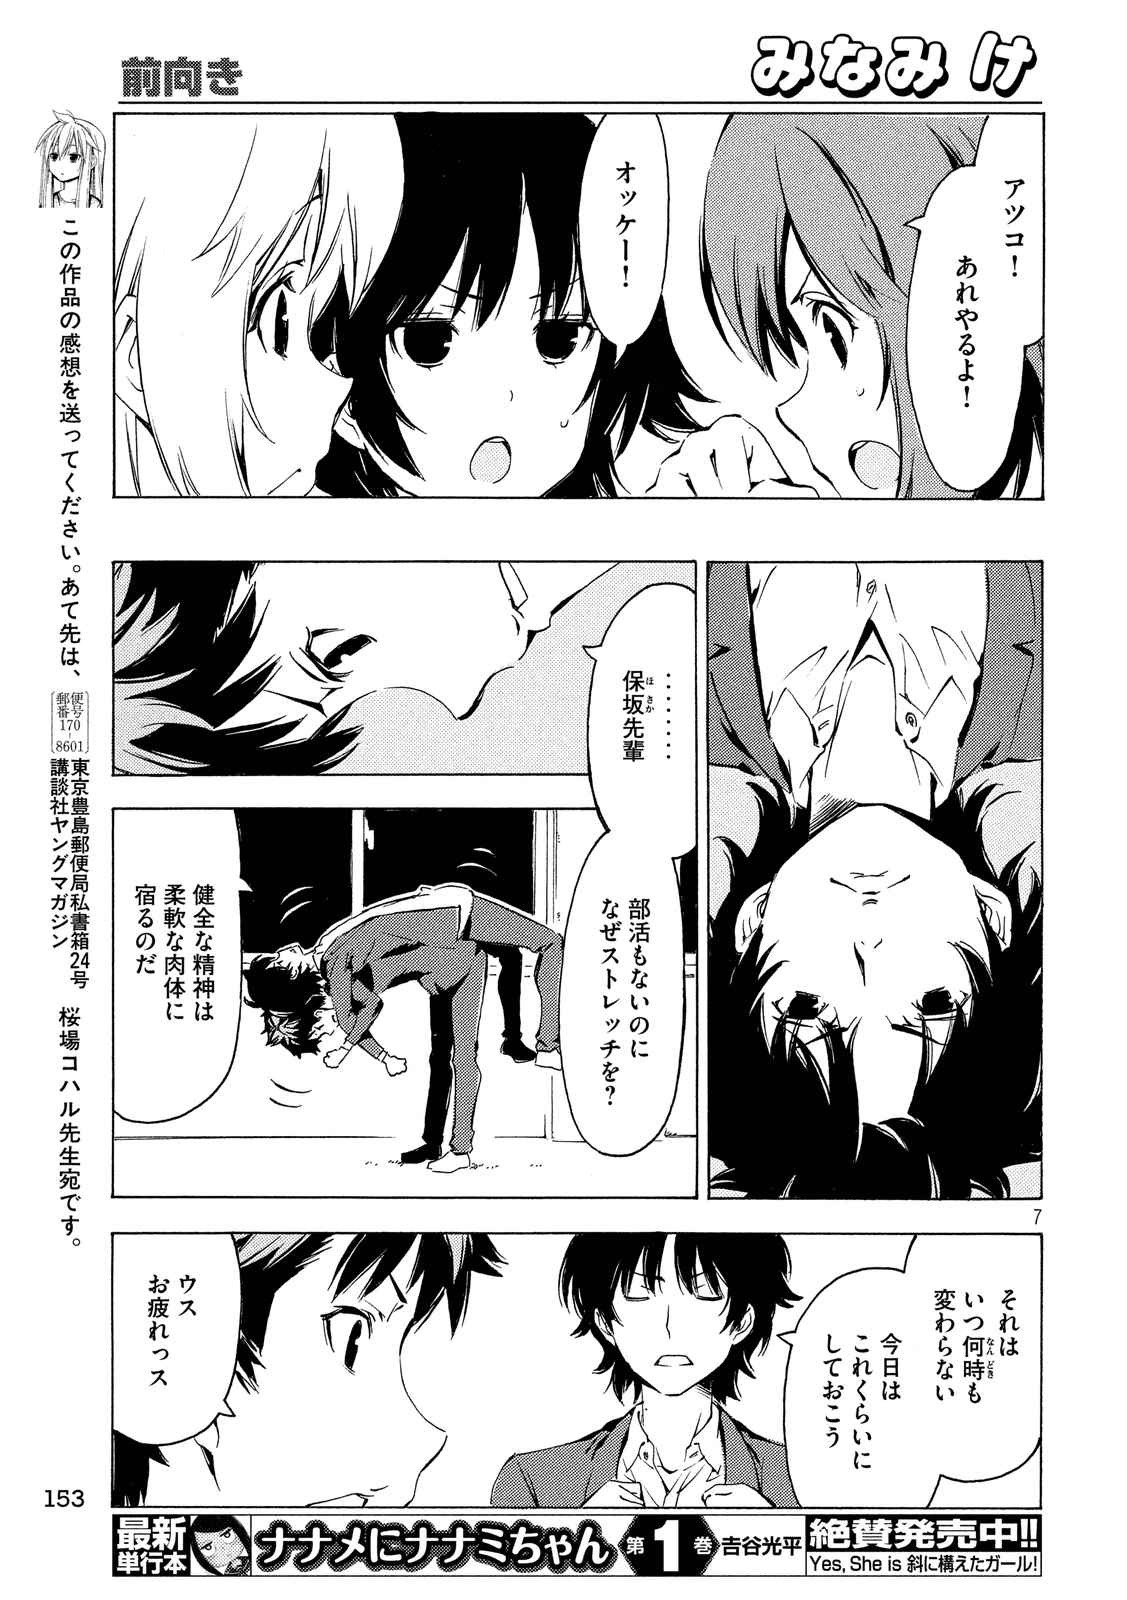 Minami-ke - Chapter 309 - Page 7